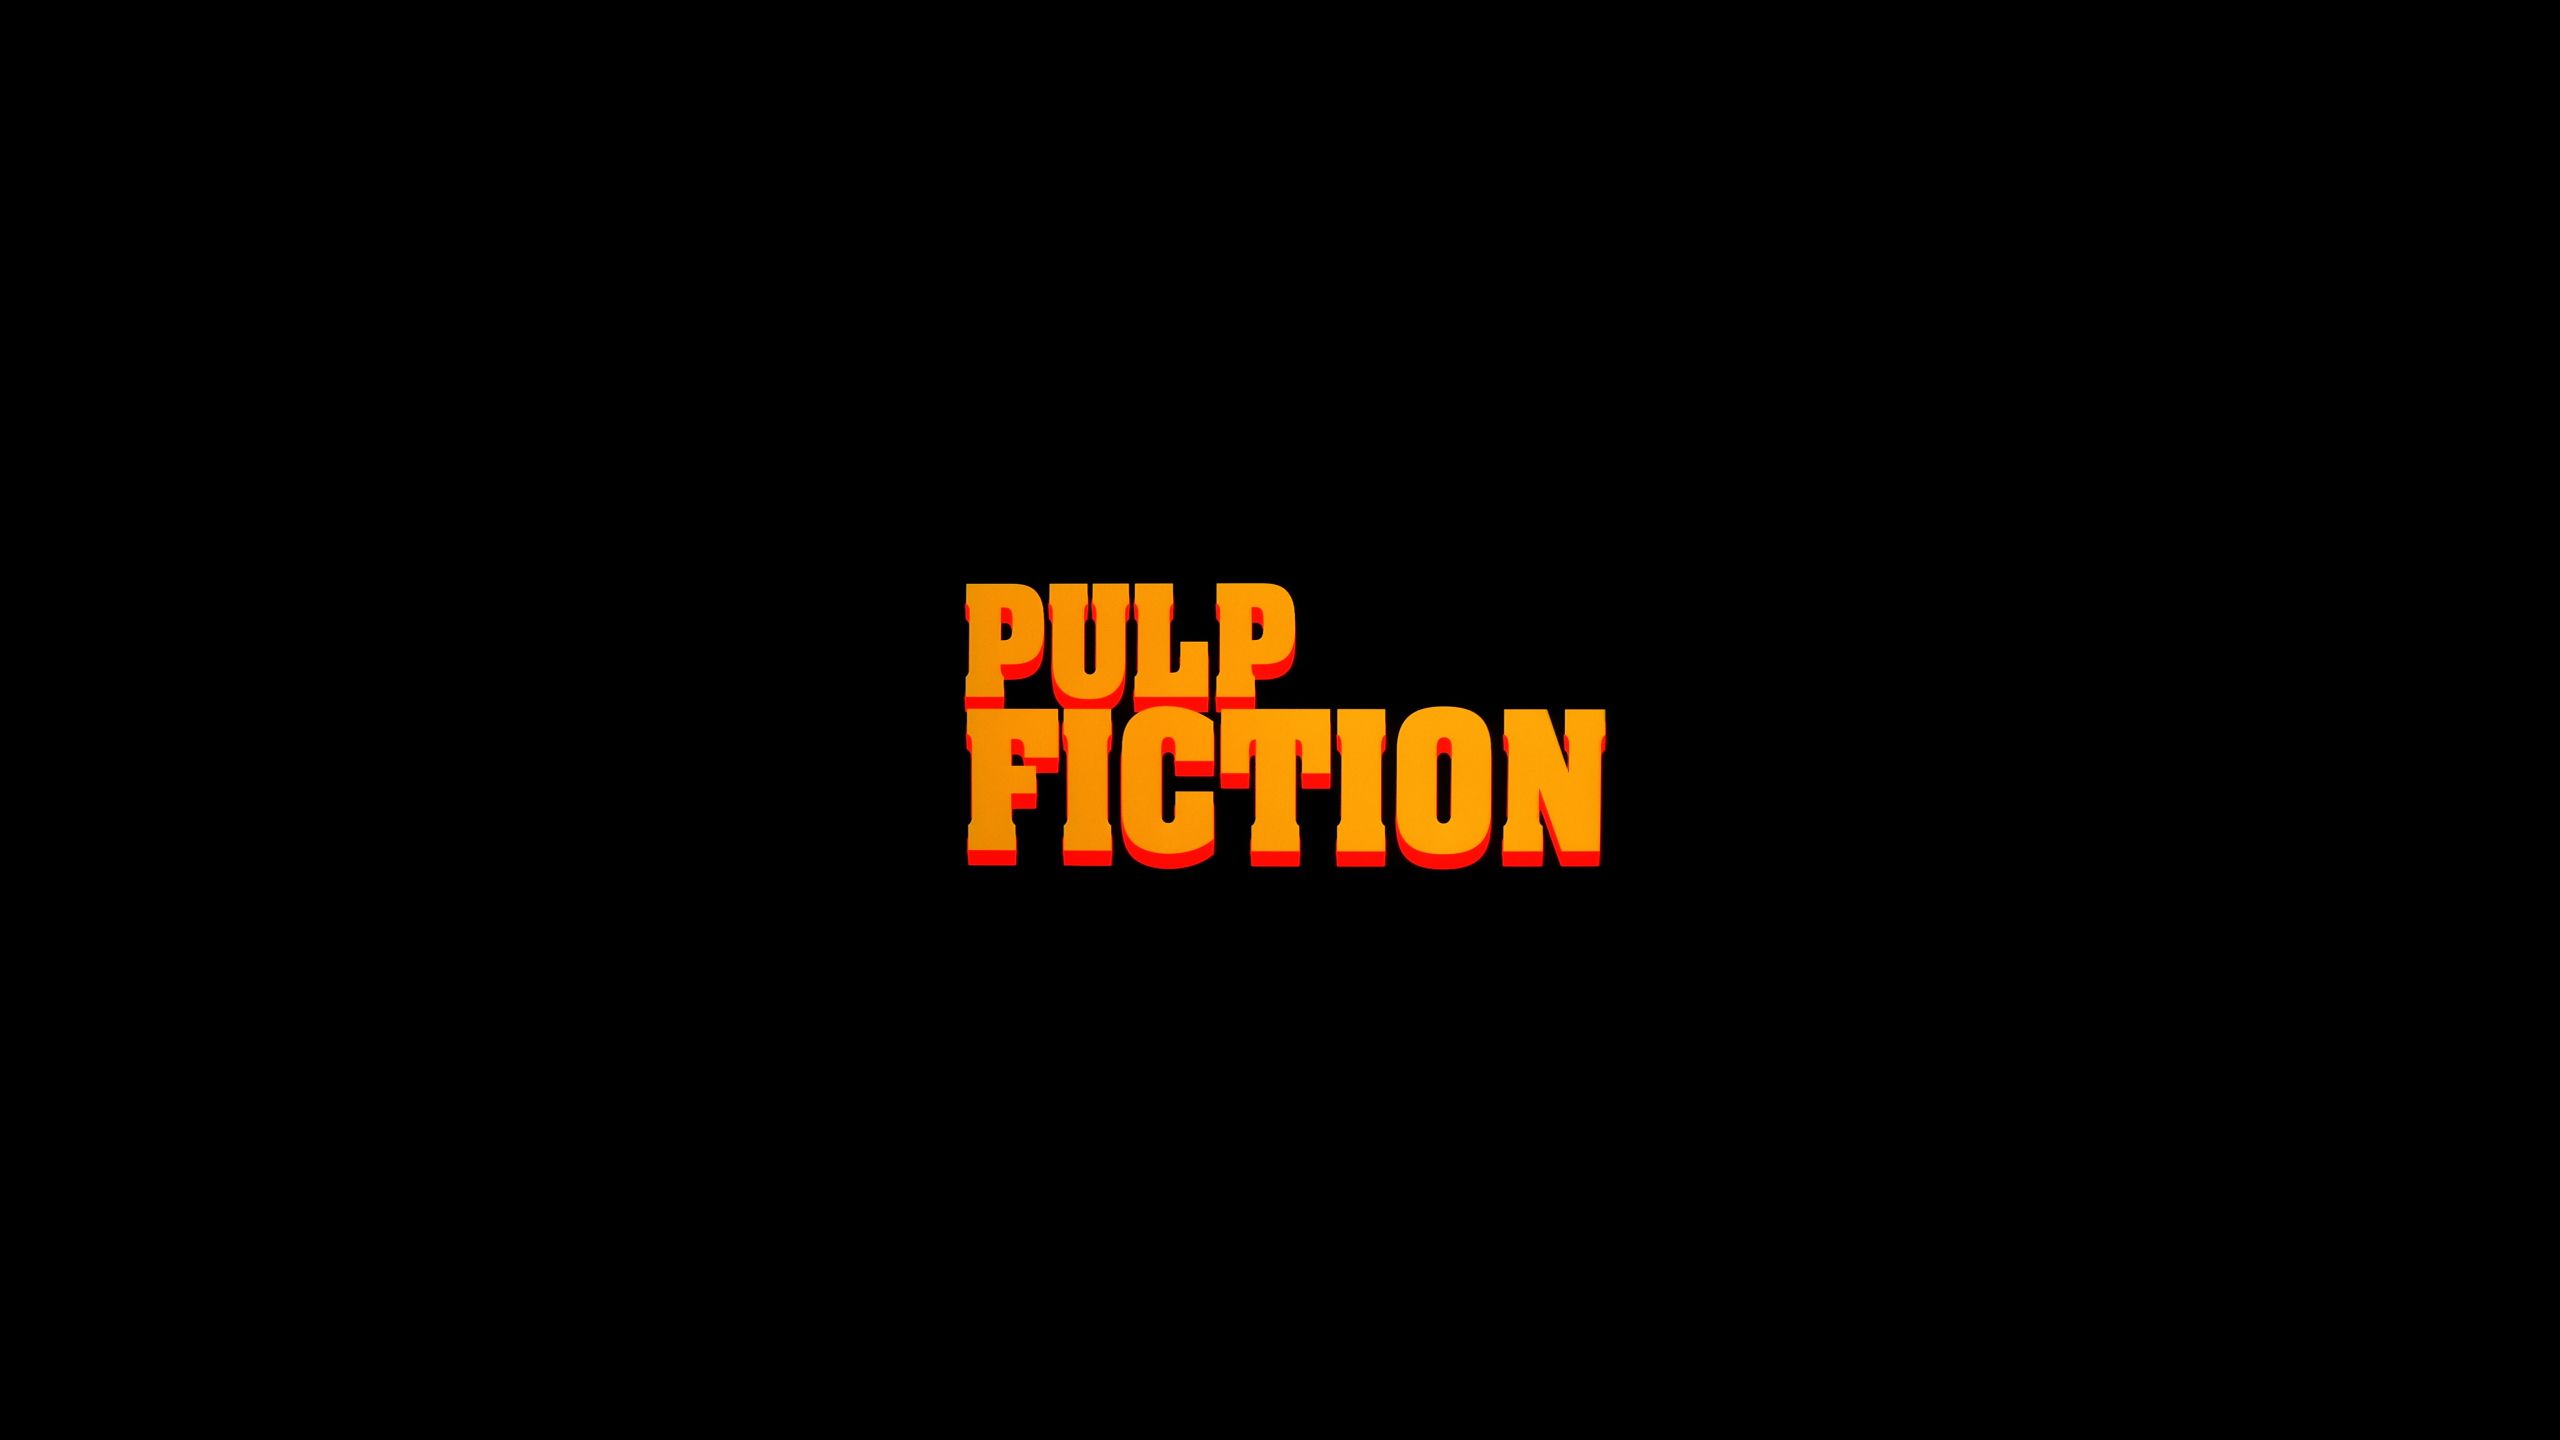 Pulp Fiction Computer Wallpapers, Desktop Backgrounds | 1280x800 ...